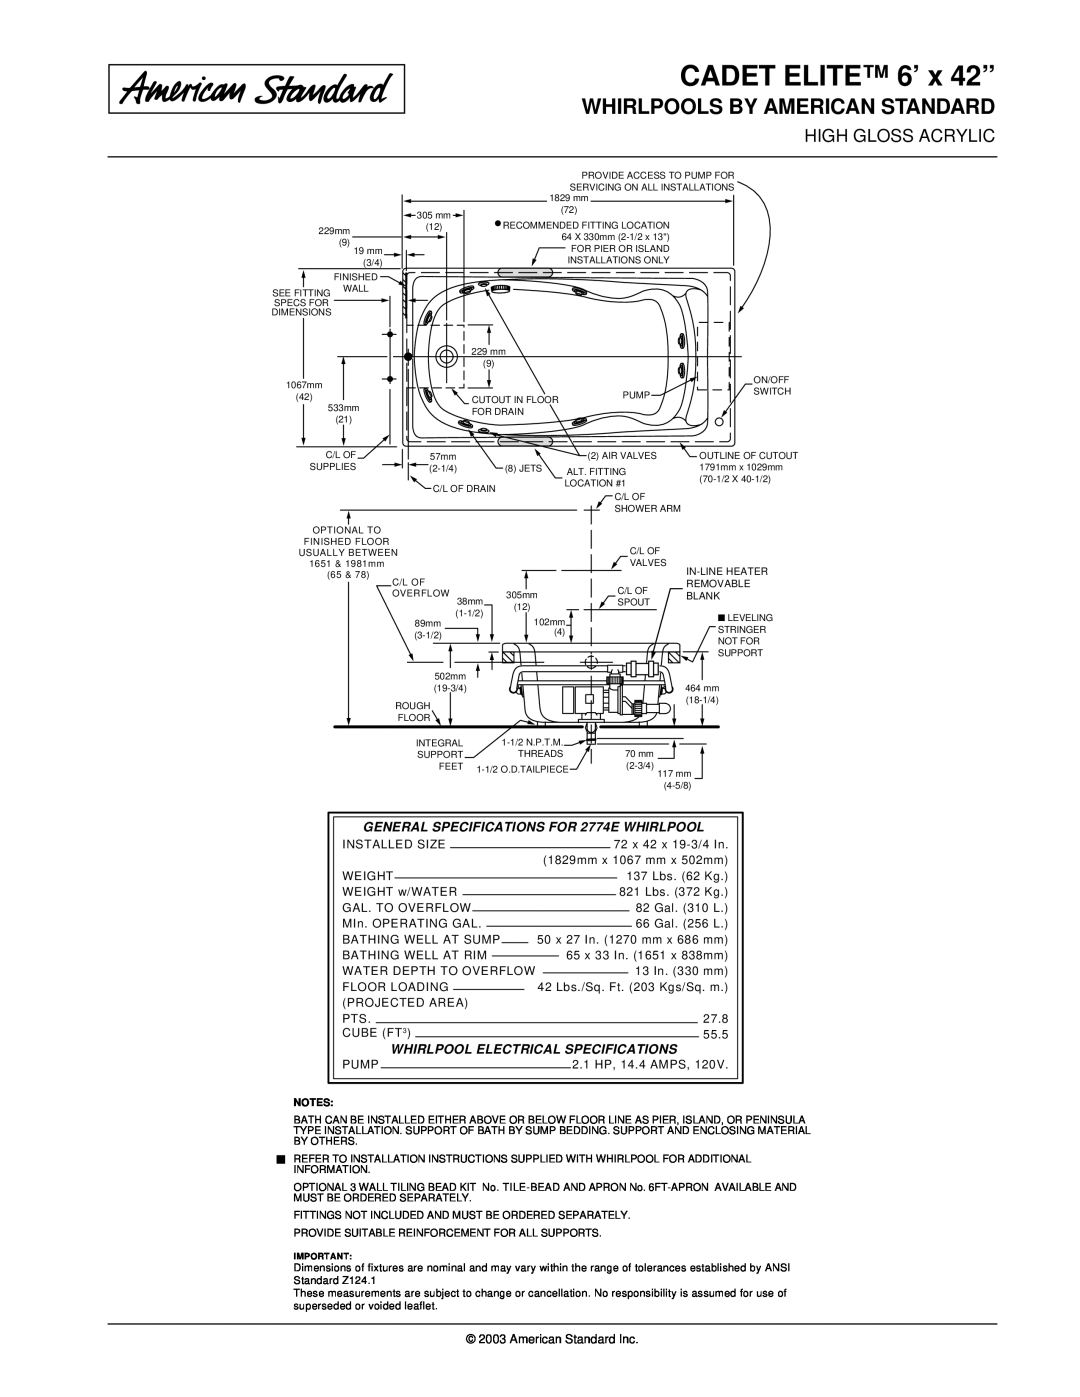 American Standard SPS 2774E CADET ELITE 6’ x 42”, Whirlpools By American Standard, Whirlpool Electrical Specifications 